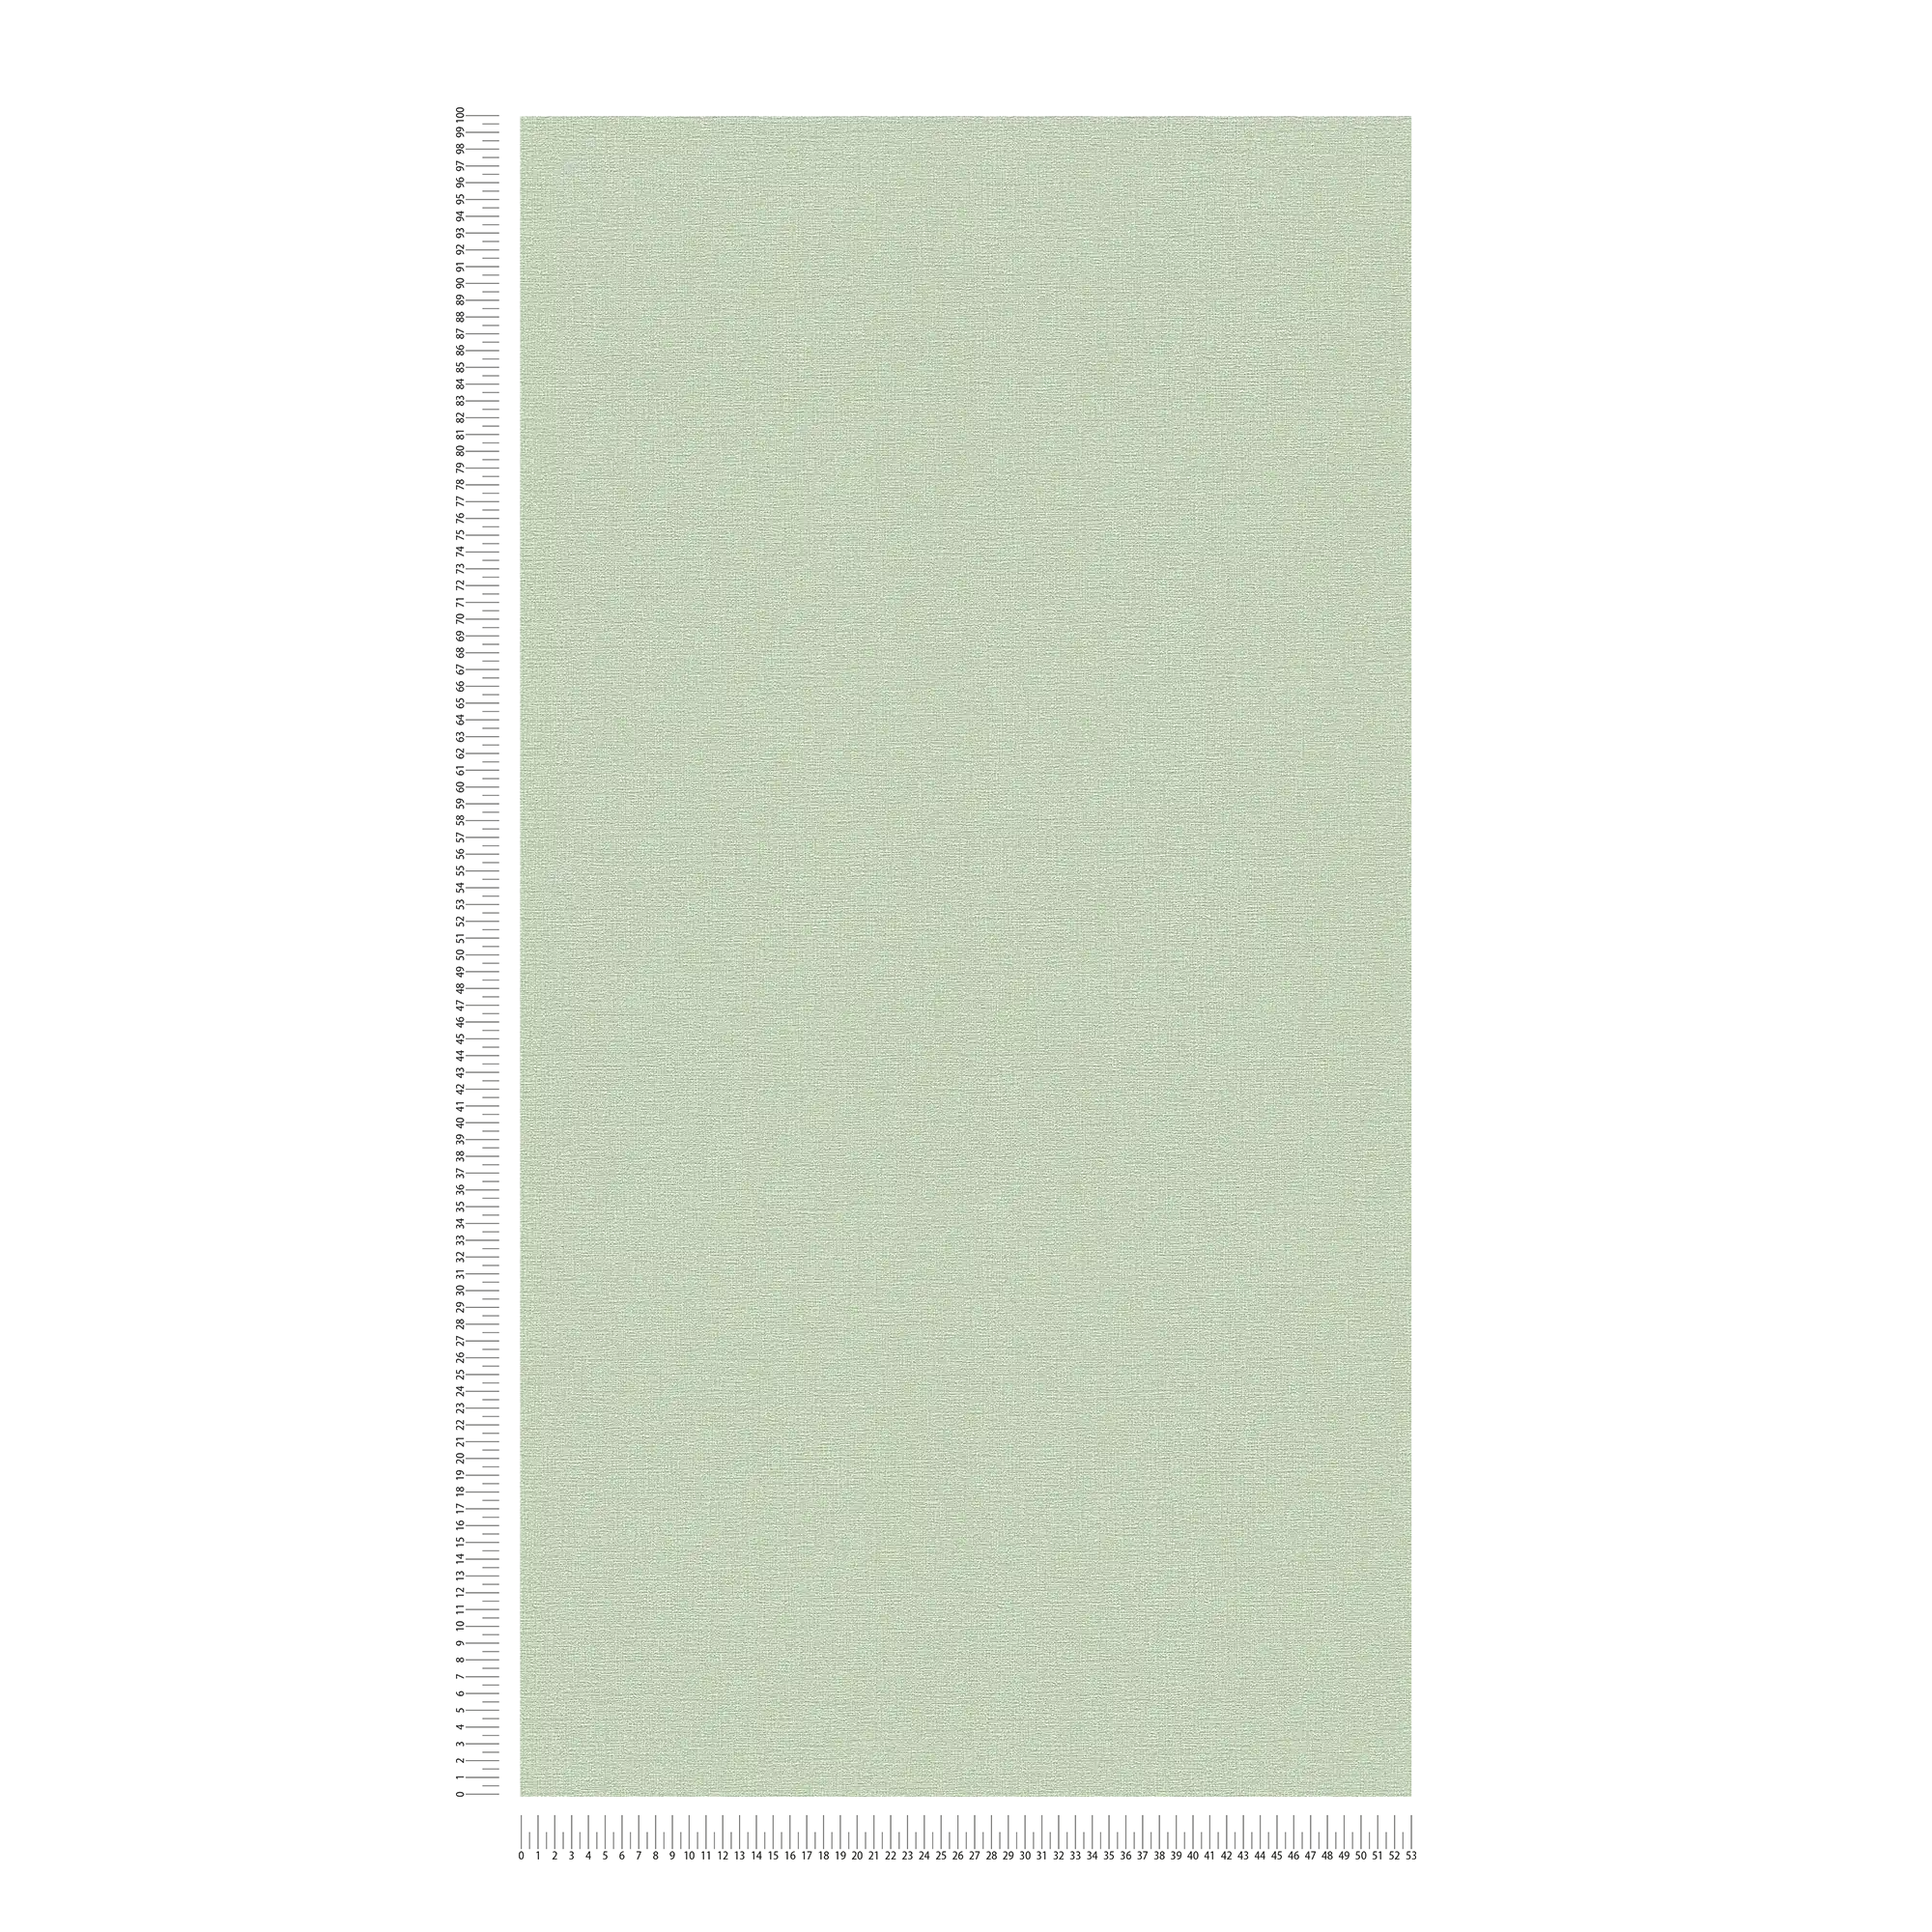             Carta da parati in stile naturale, tinta unita con motivo a trama - verde, bianco
        